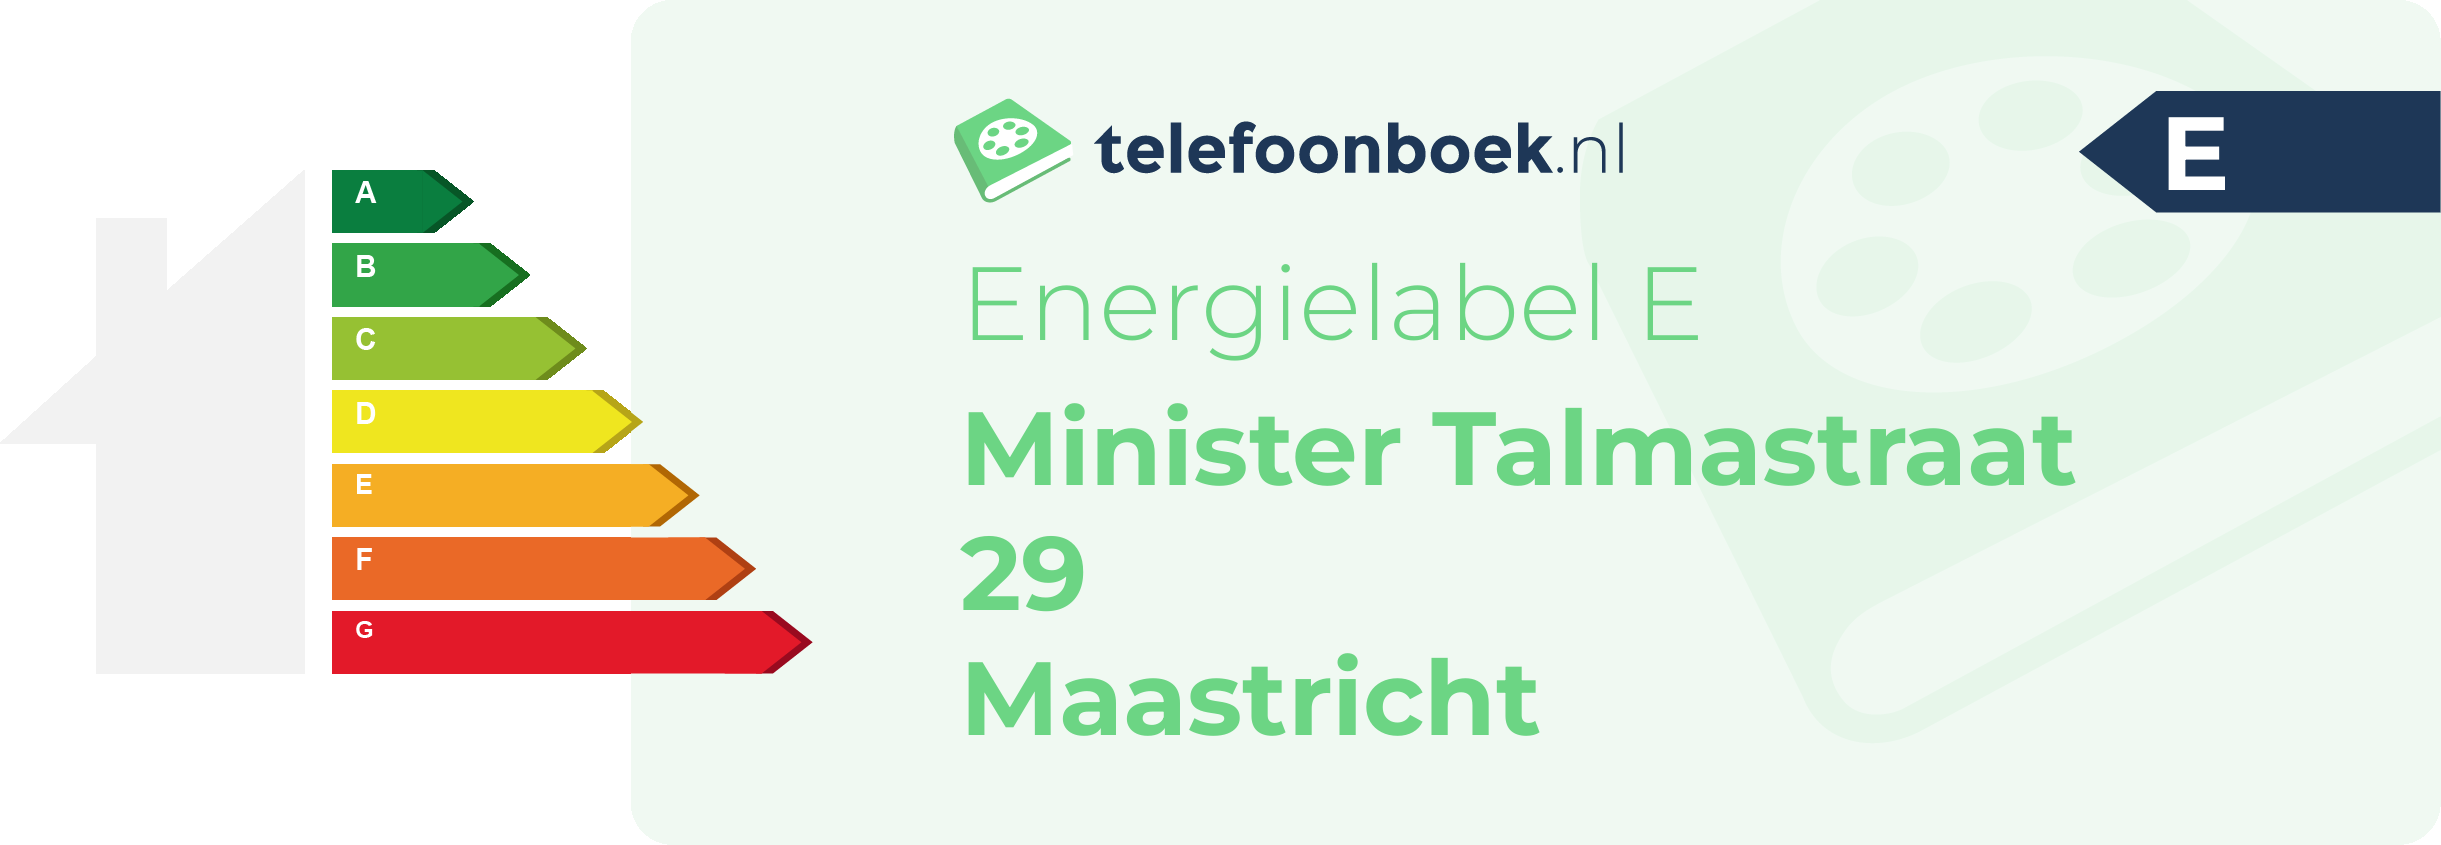 Energielabel Minister Talmastraat 29 Maastricht